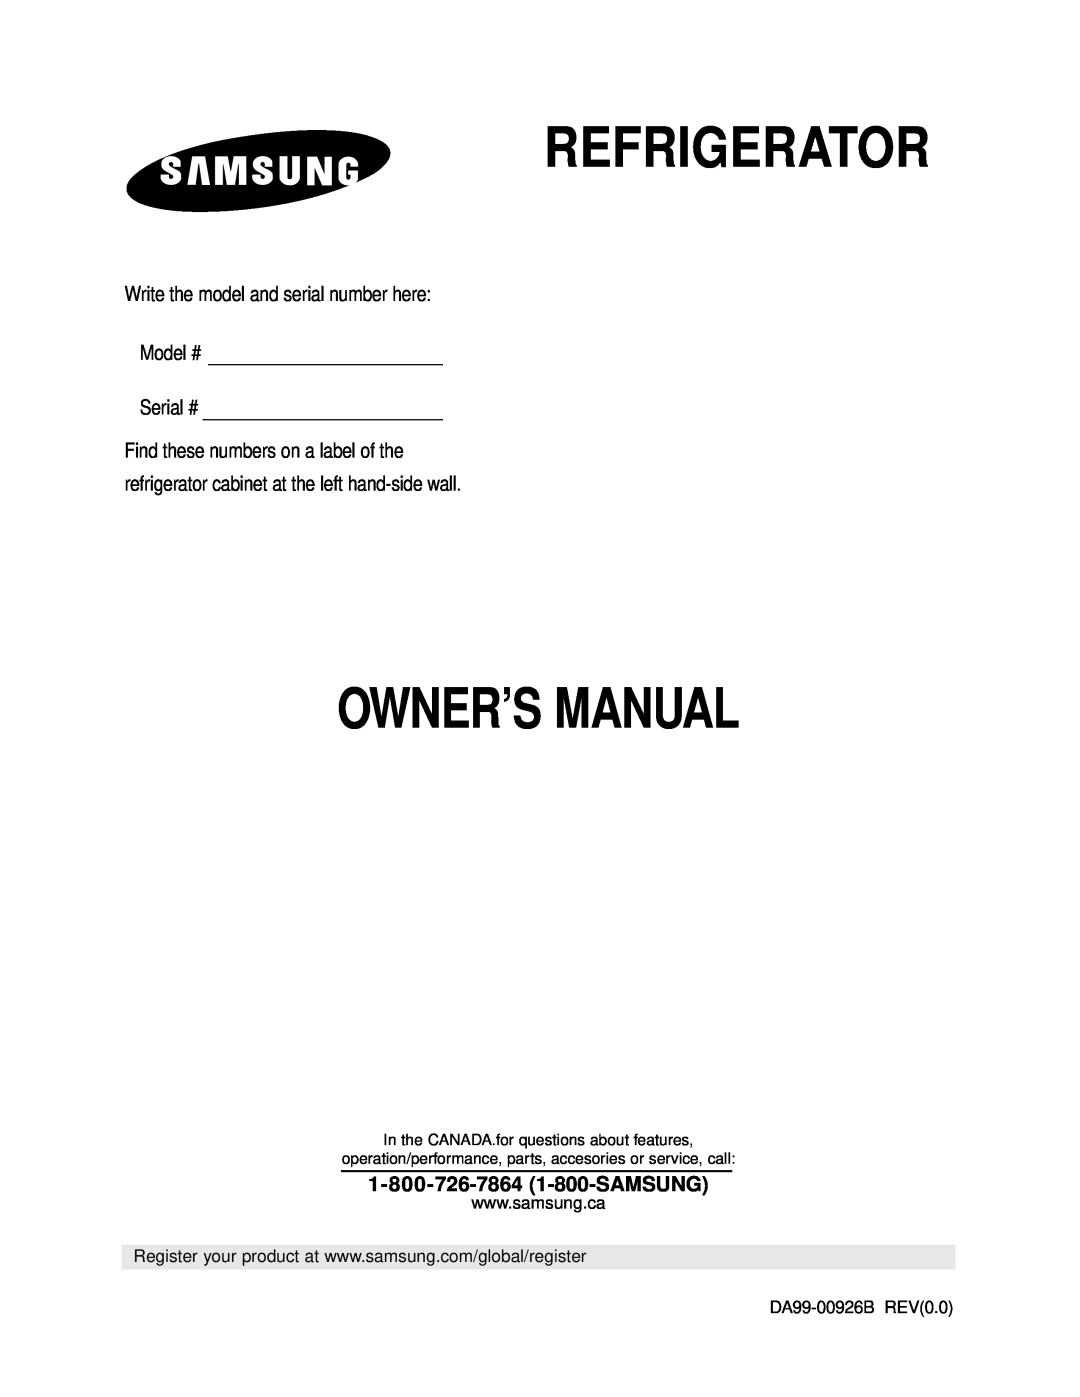 Samsung DA99-00926B owner manual Write the model and serial number here Model # Serial #, Refrigerator 